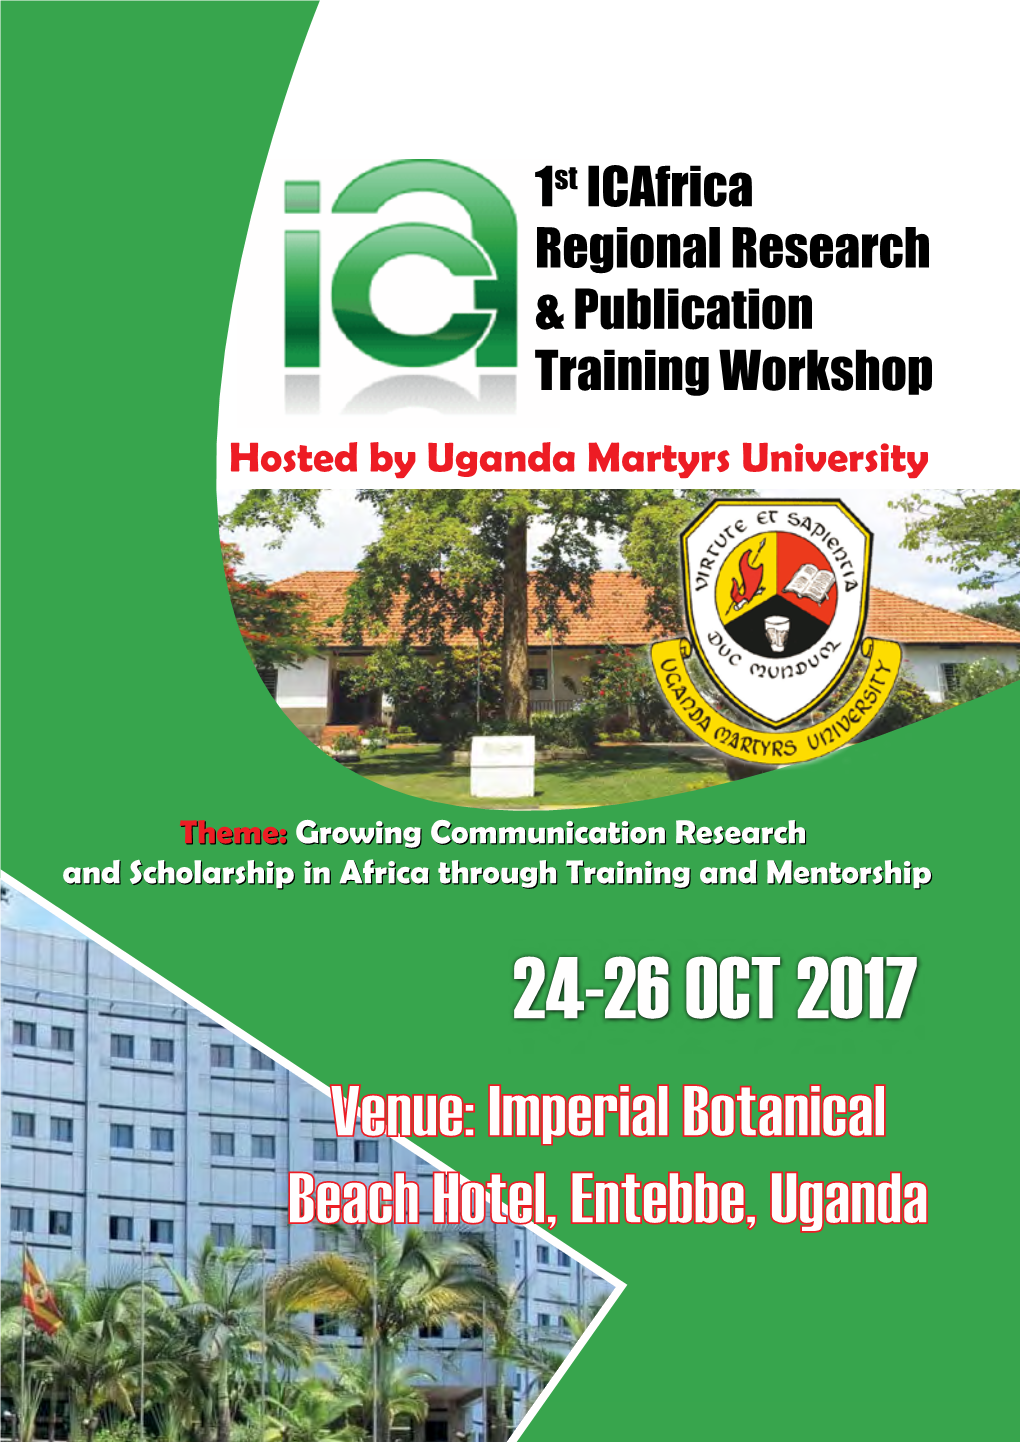 1St Icafrica Regional Research & Publication Training Workshop